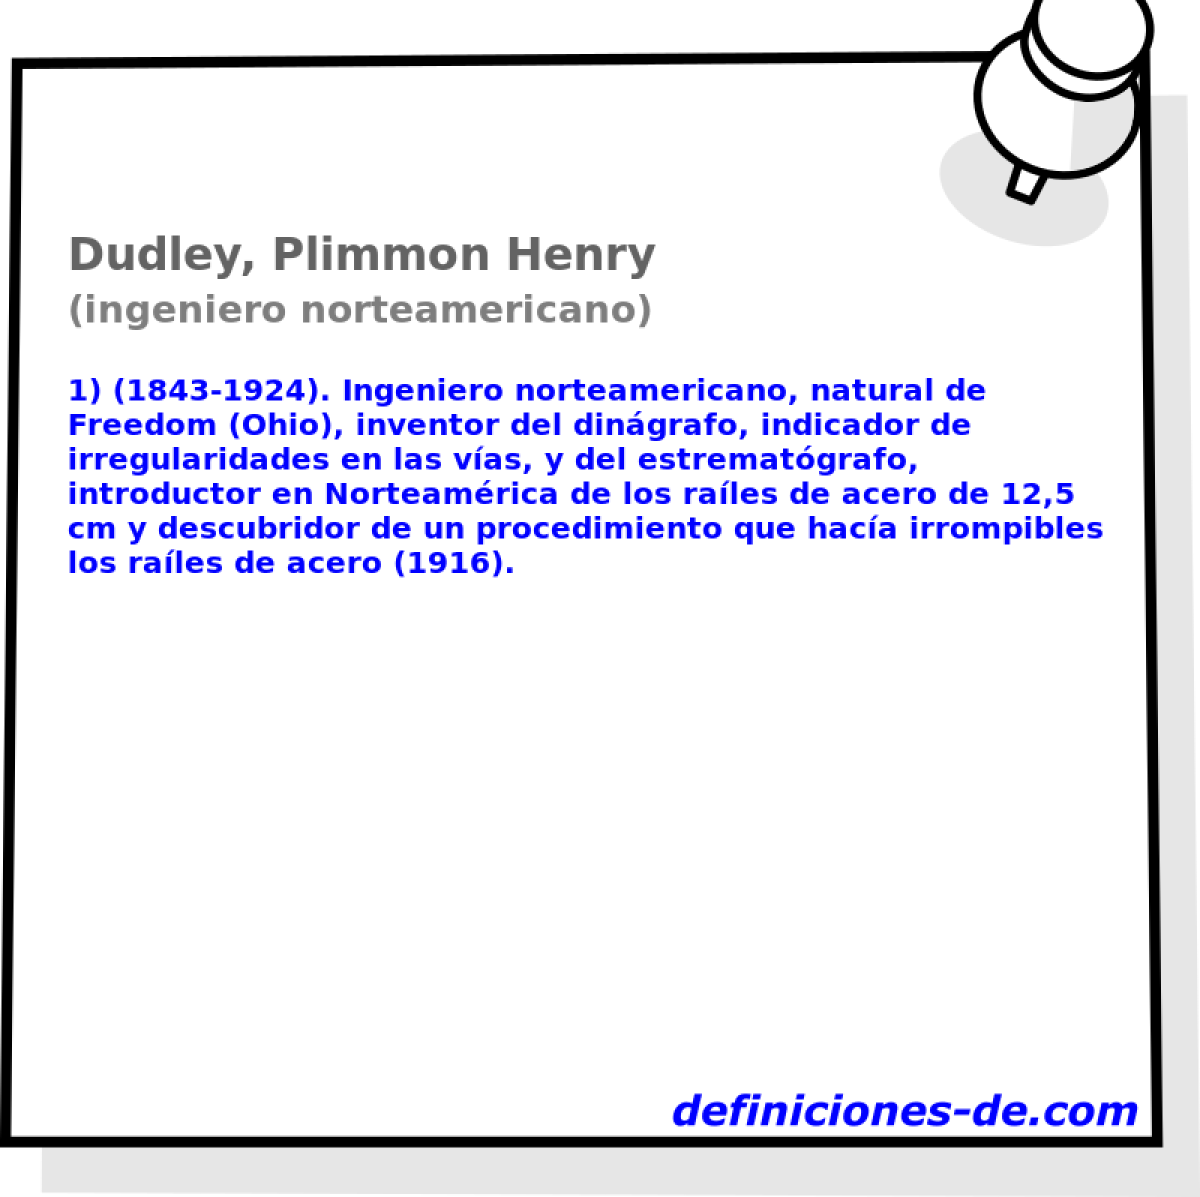 Dudley, Plimmon Henry (ingeniero norteamericano)